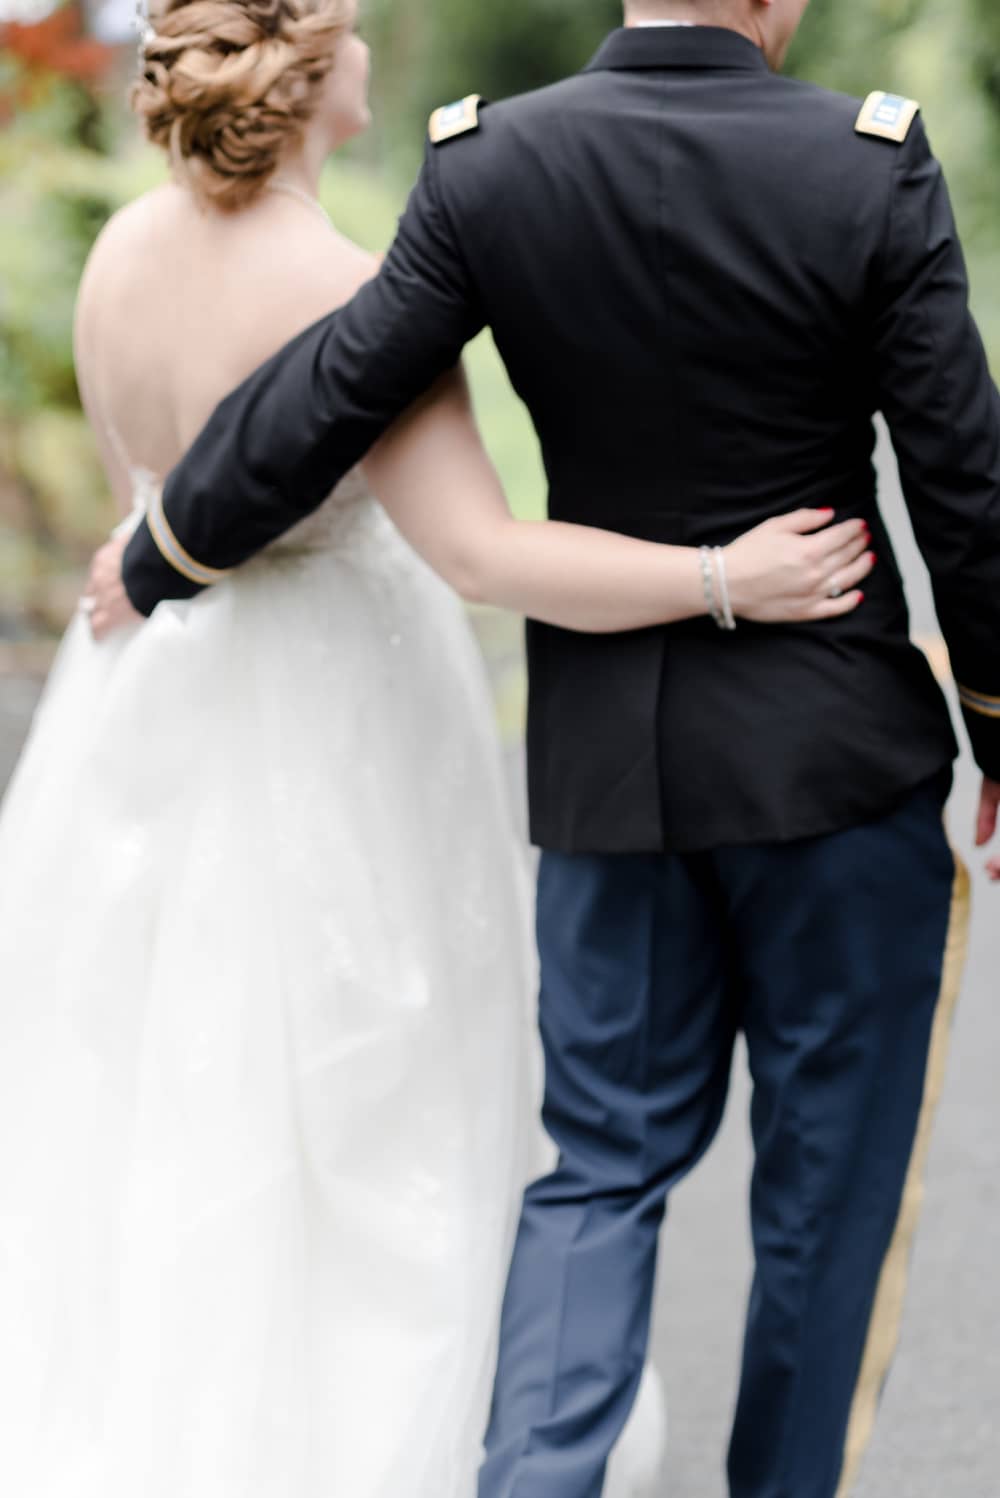 Bride and groom walking together at Rust Manor House wedding in Leesburg VA